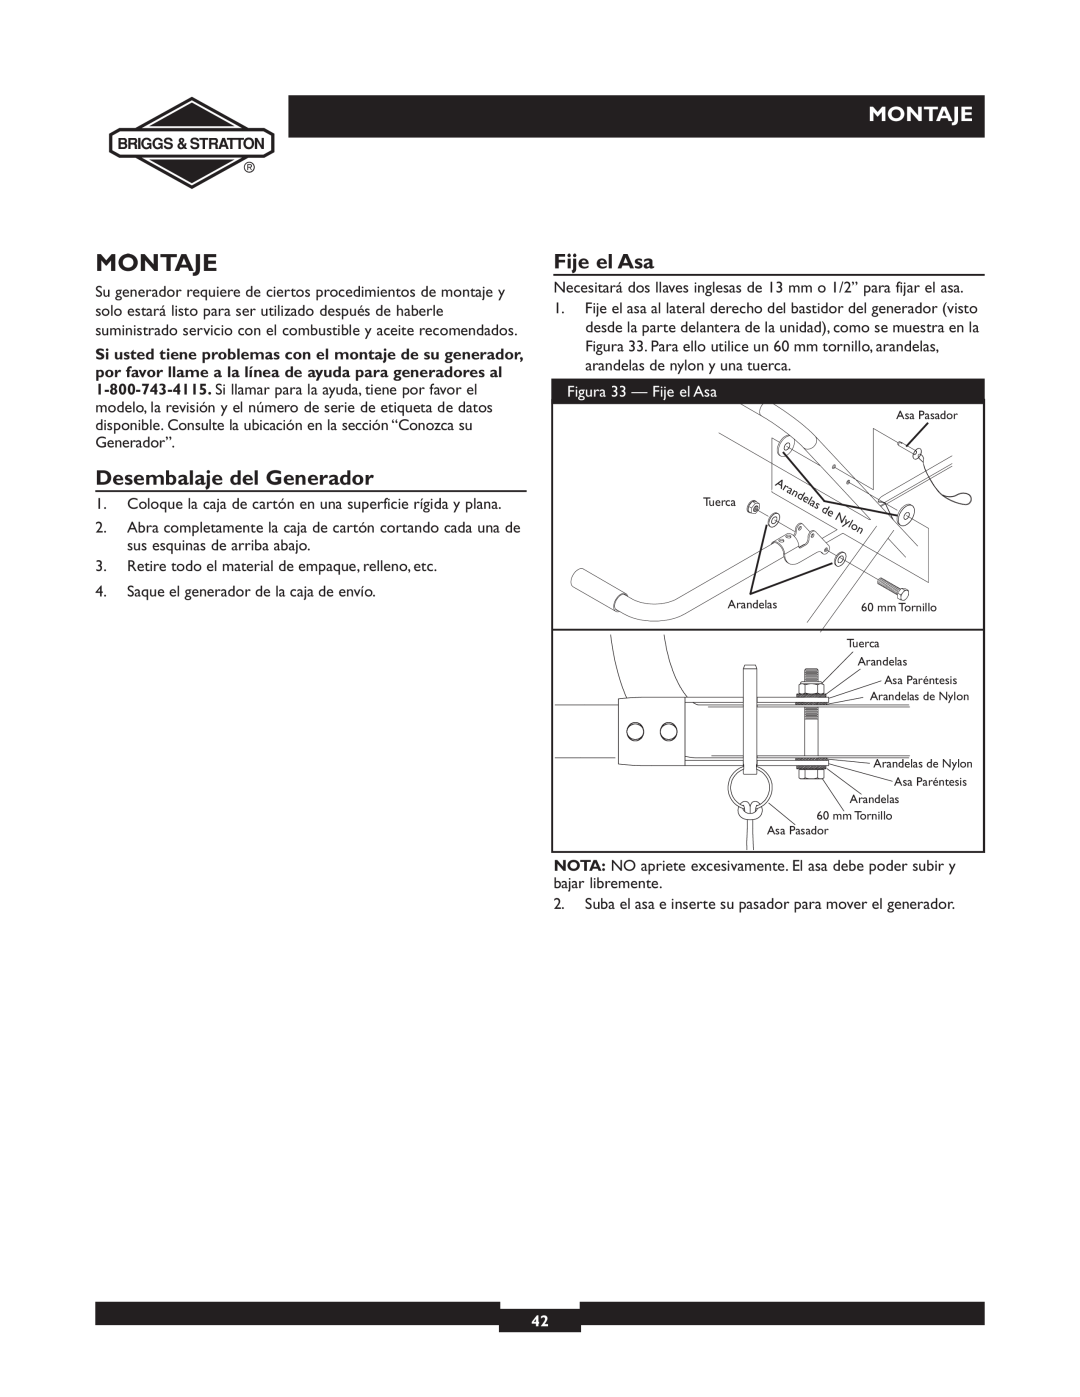 Briggs & Stratton 01894-1 manual Montaje, Desembalaje del Generador, Figura 33 - Fije el Asa 